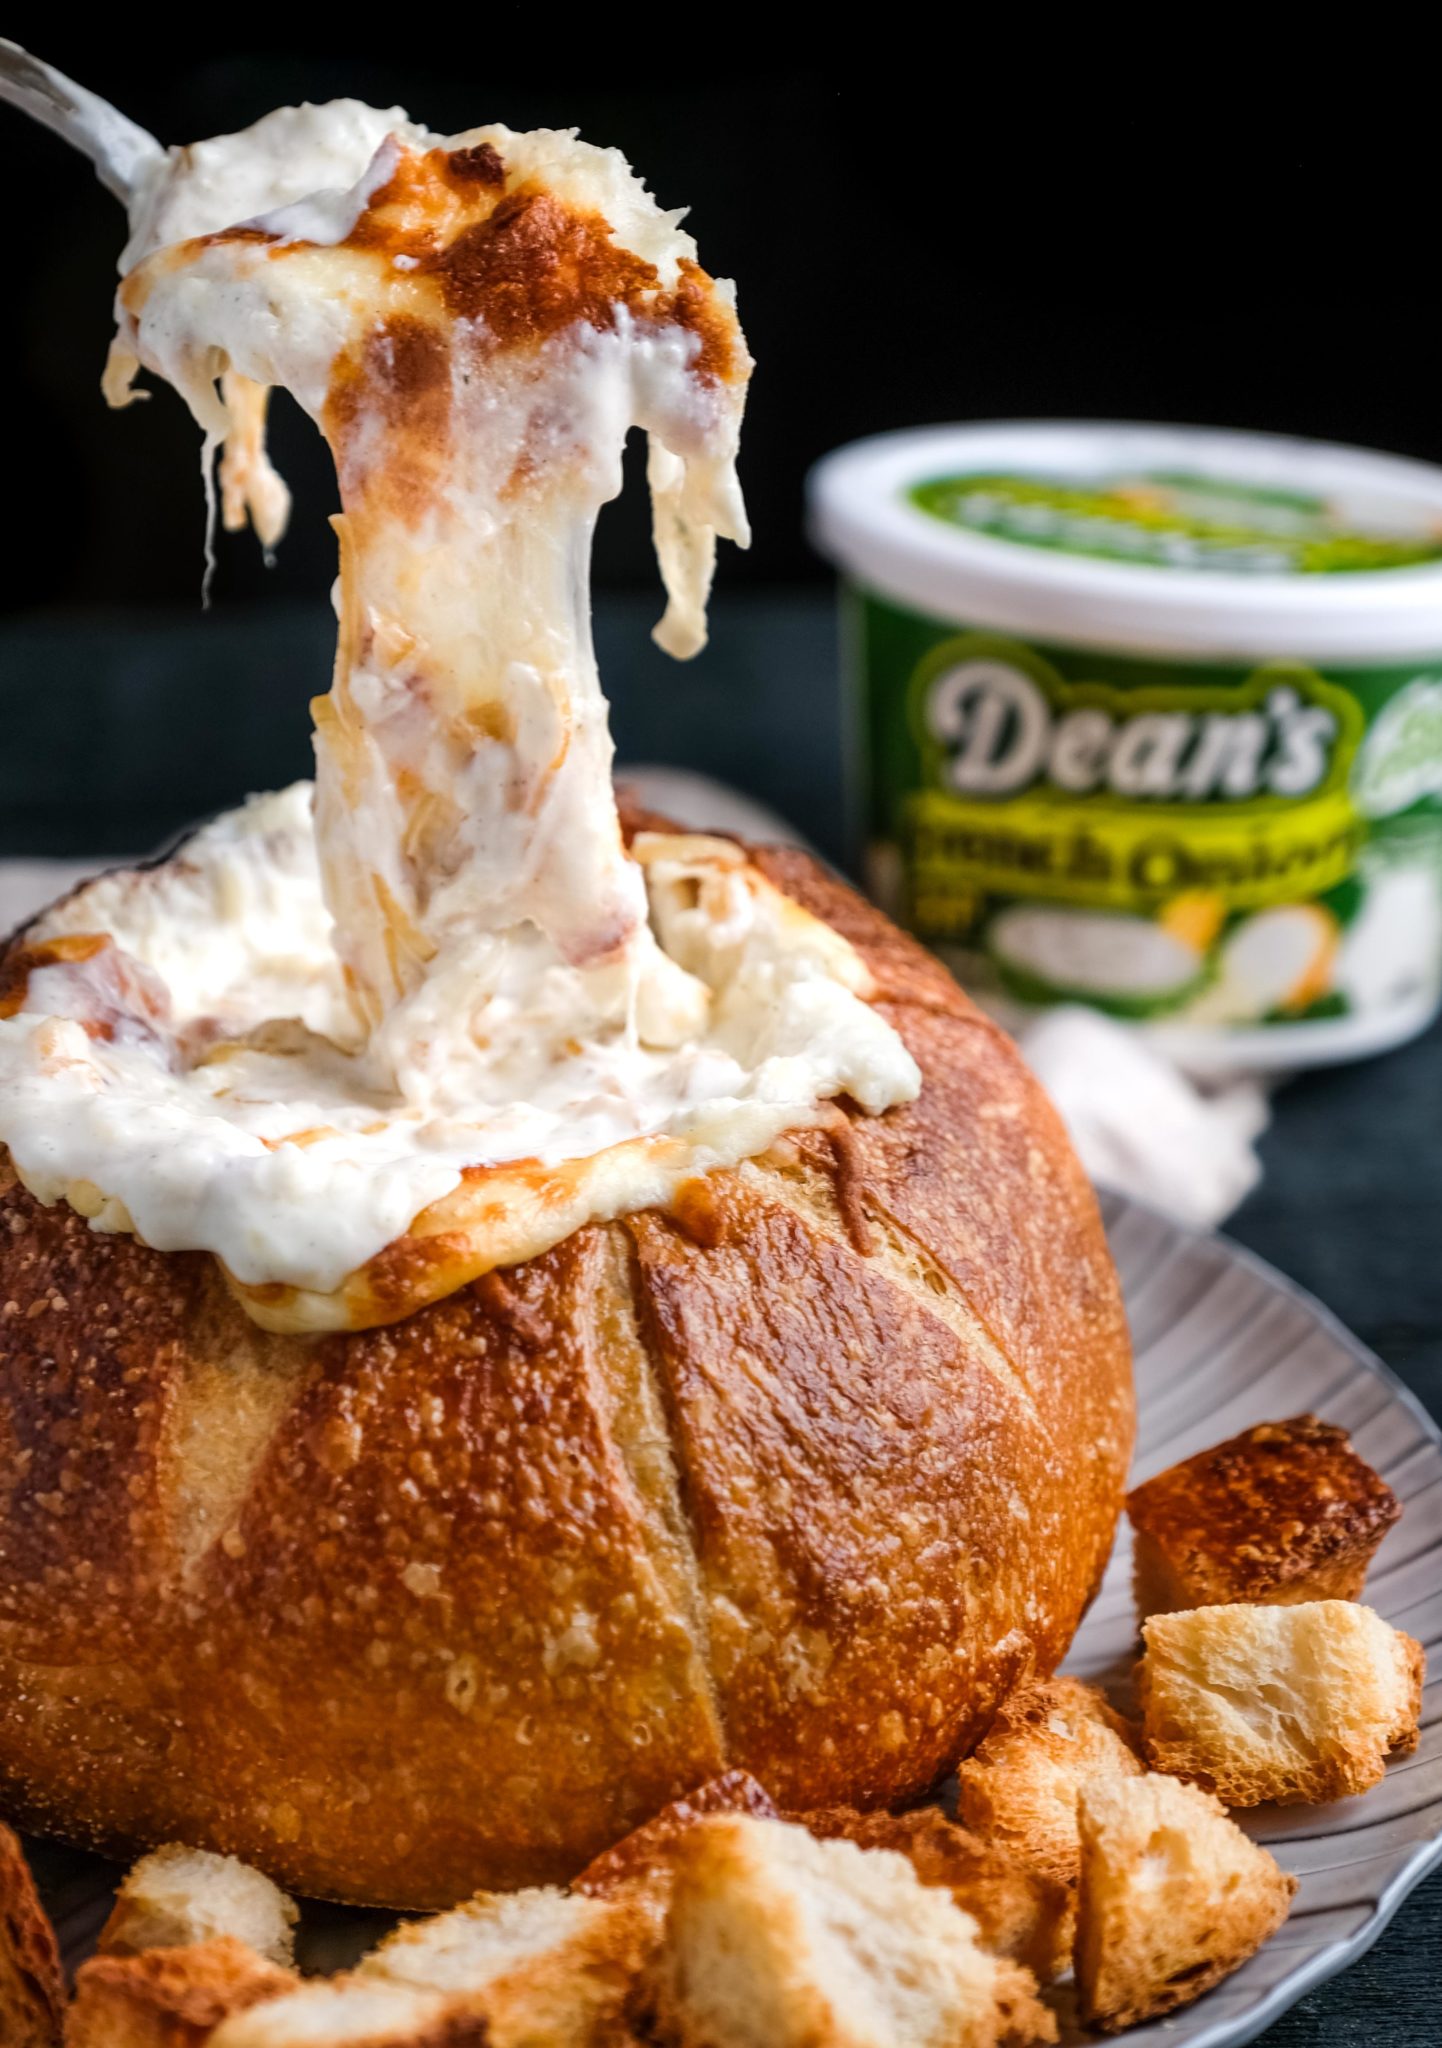 https://www.thefoodjoy.com/wp-content/uploads/2019/12/deans-bread-bowl-7.jpg